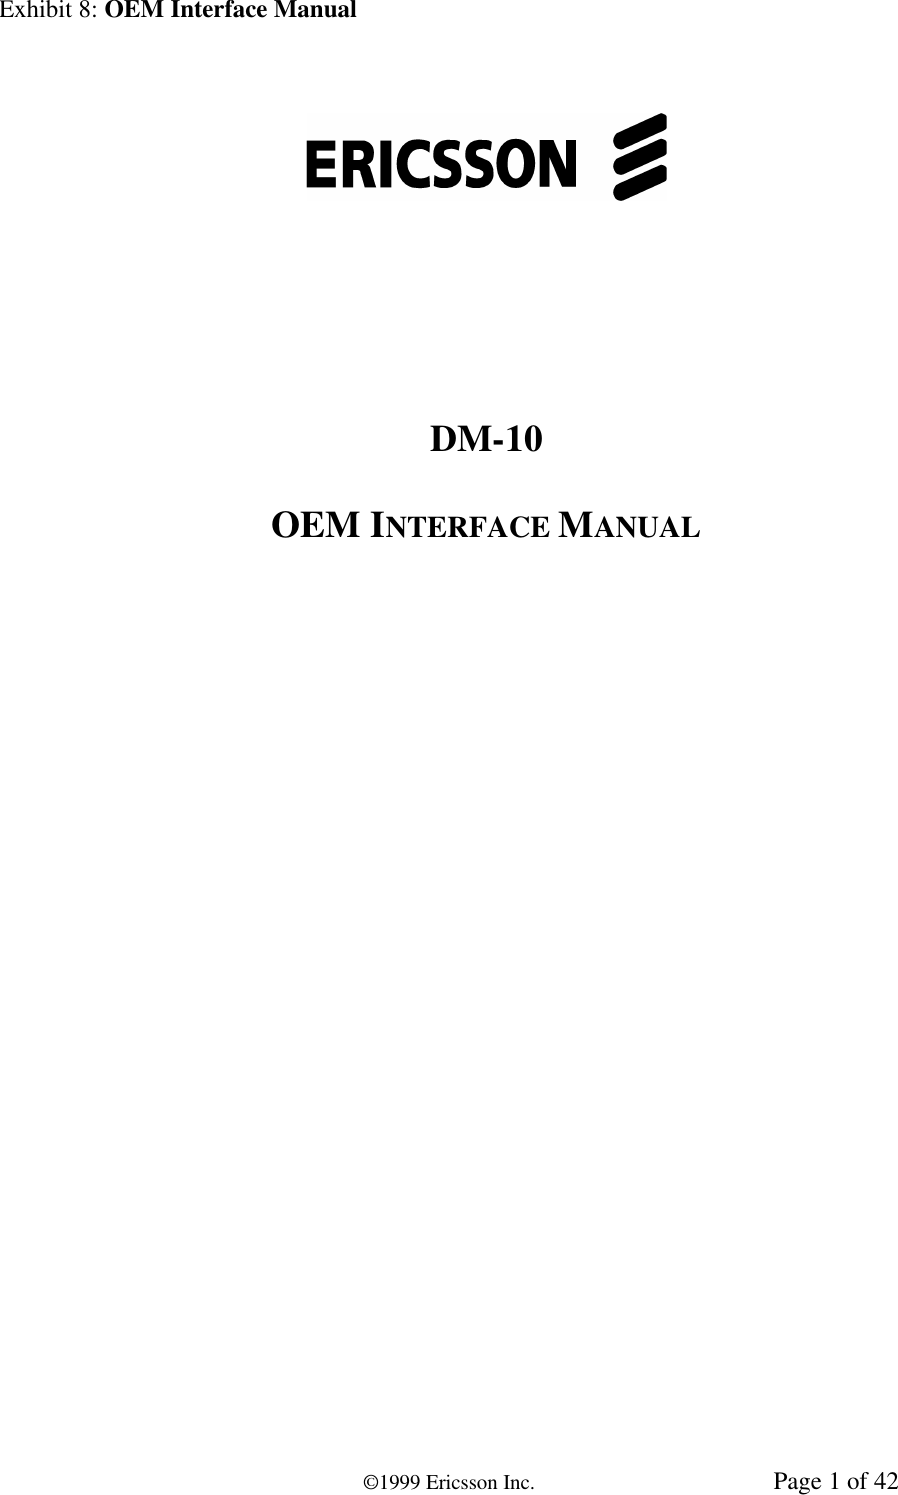 Exhibit 8: OEM Interface Manual©1999 Ericsson Inc. Page 1 of 42DM-10OEM INTERFACE MANUAL